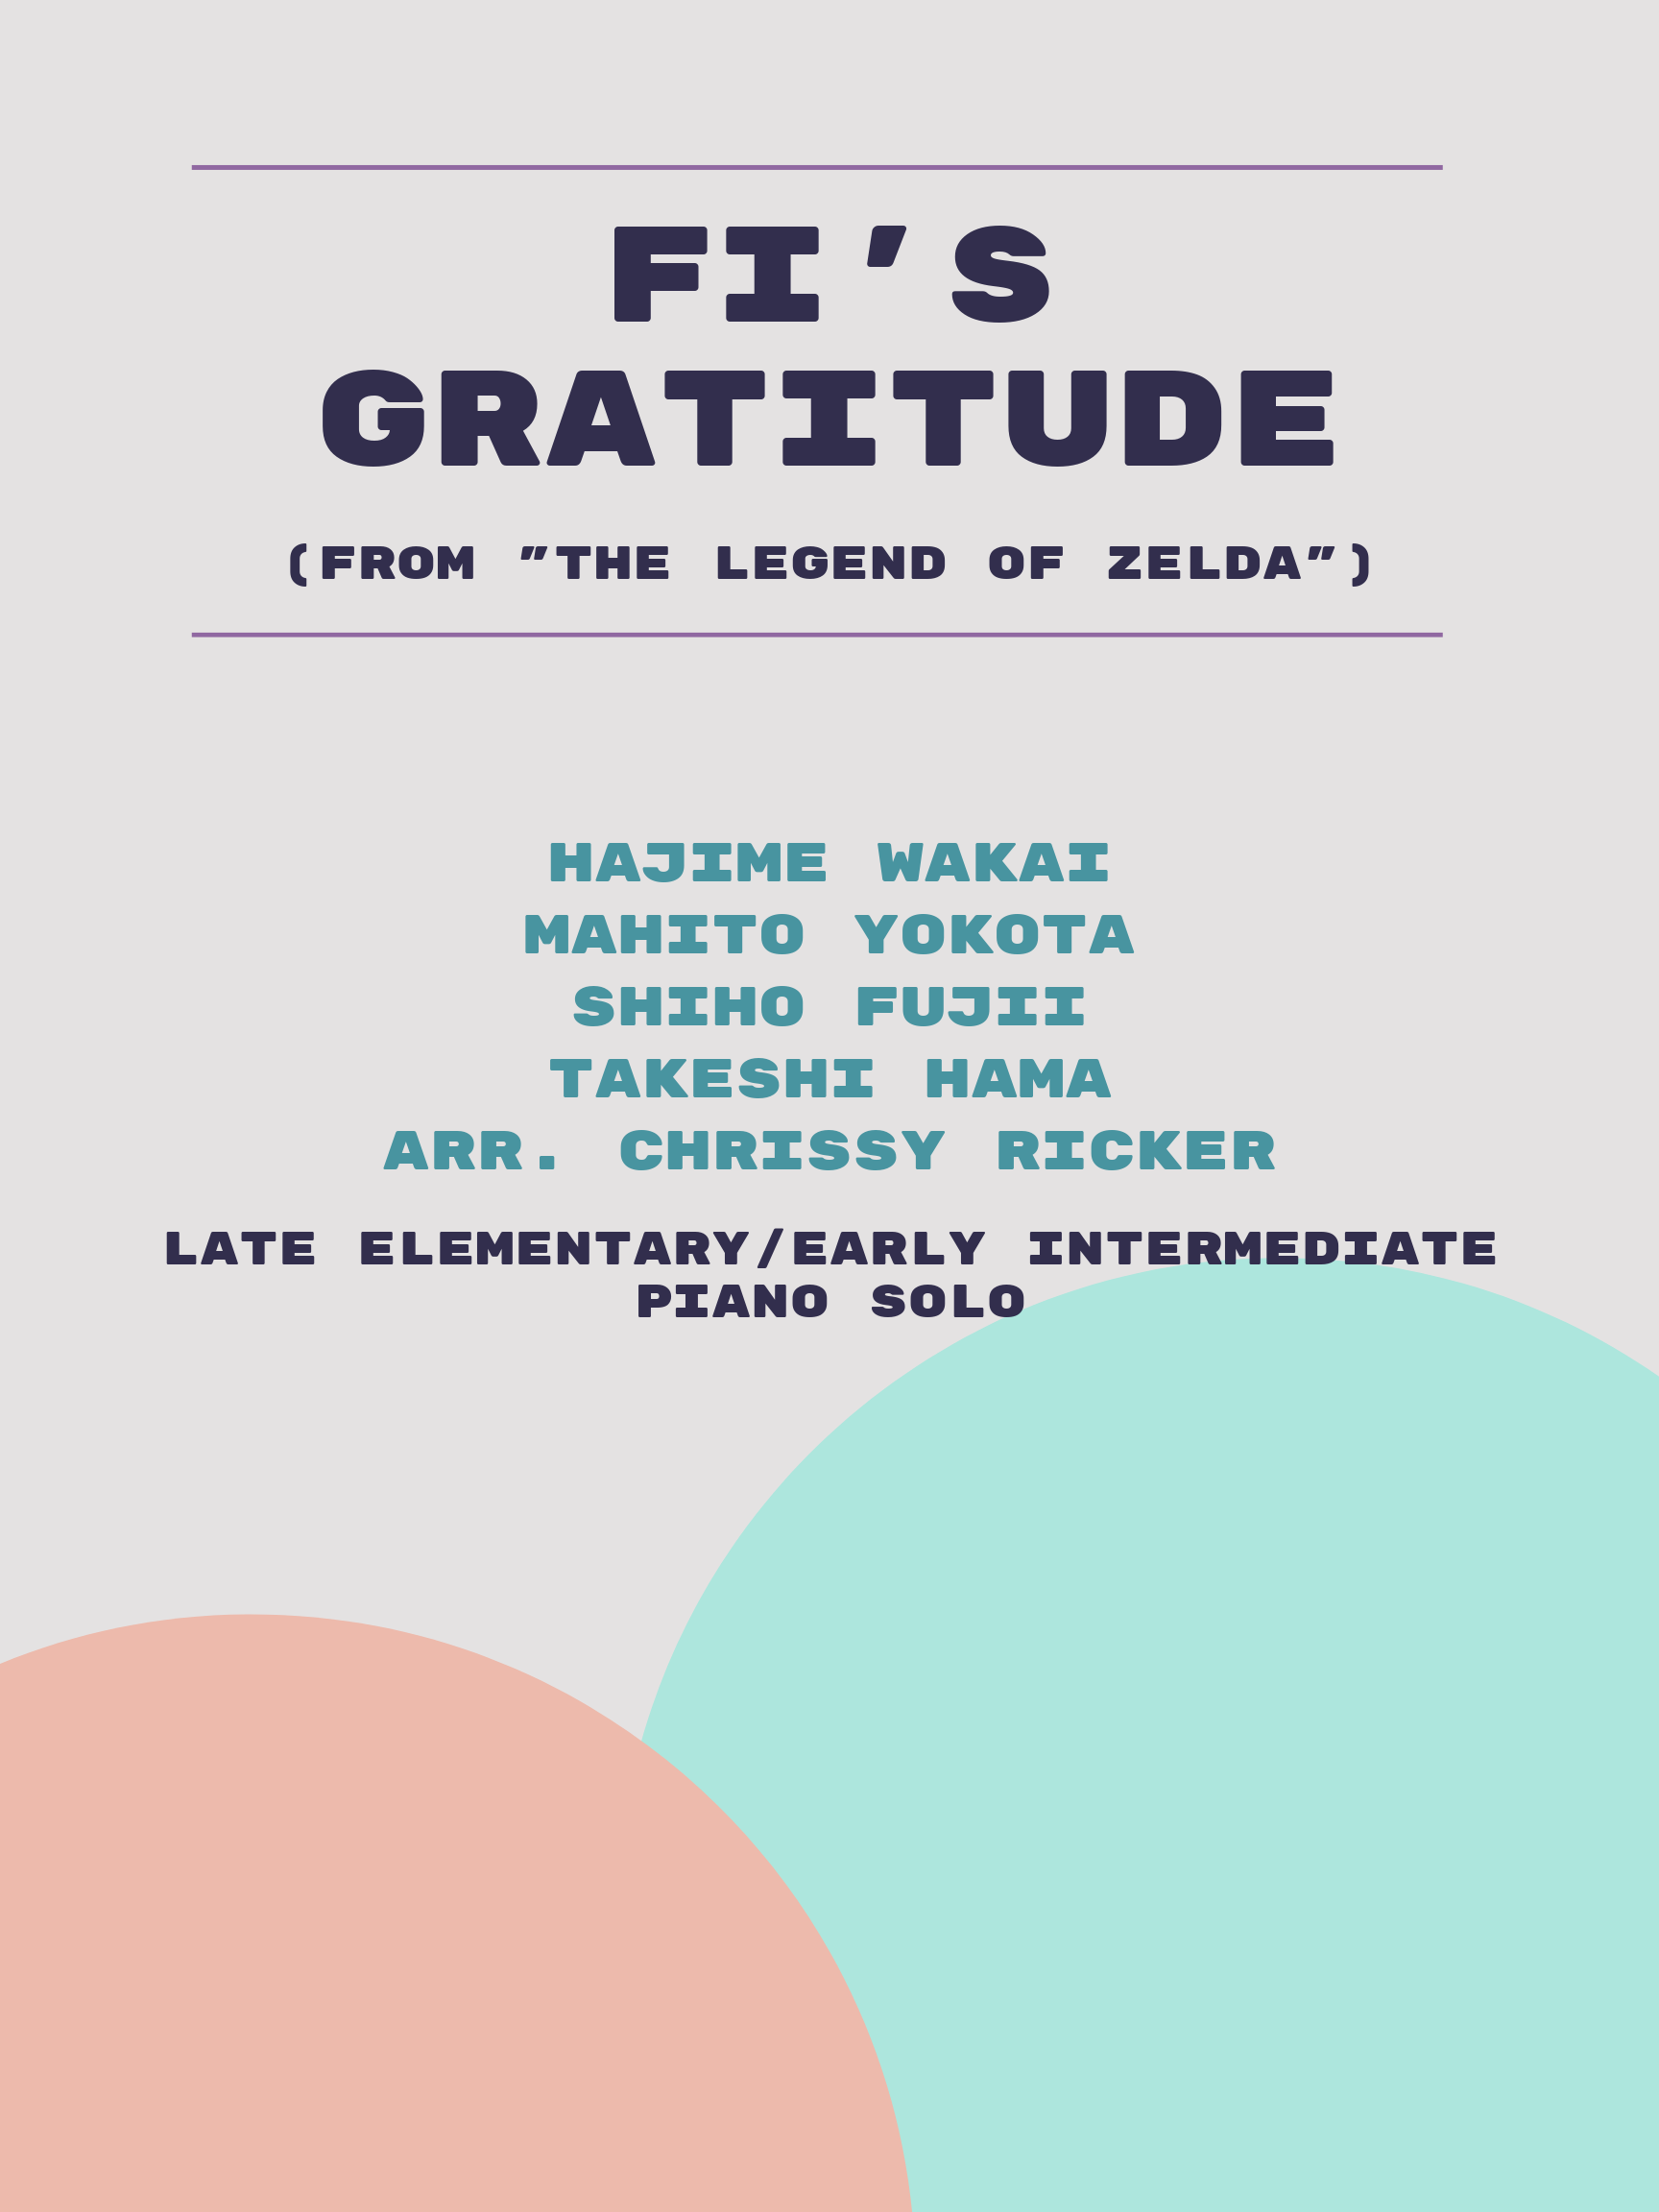 Fi's Gratitude by Hajime Wakai, Mahito Yokota, Shiho Fujii, Takeshi Hama